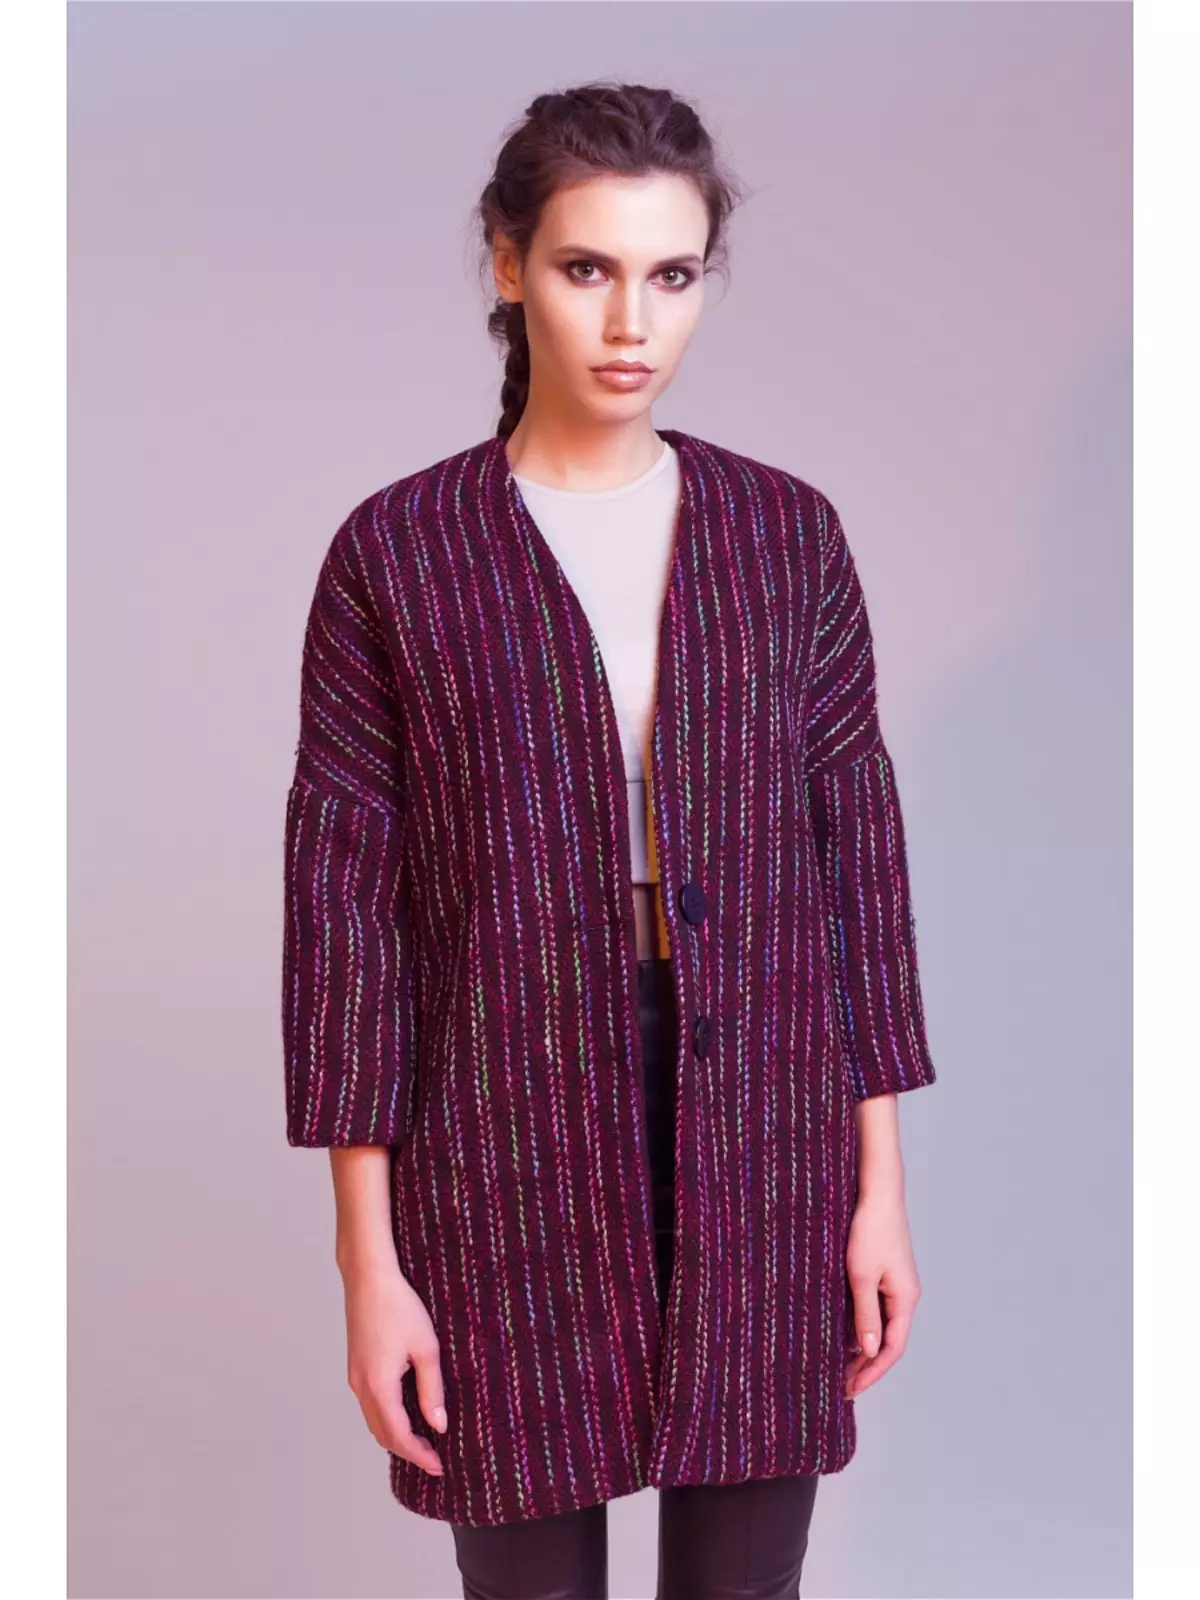 Chaqueta de abrigo (36 fotos): Modelos de moda Valya de la temporada de primavera 2021, abrigo de mujer en forma de chaqueta 478_16